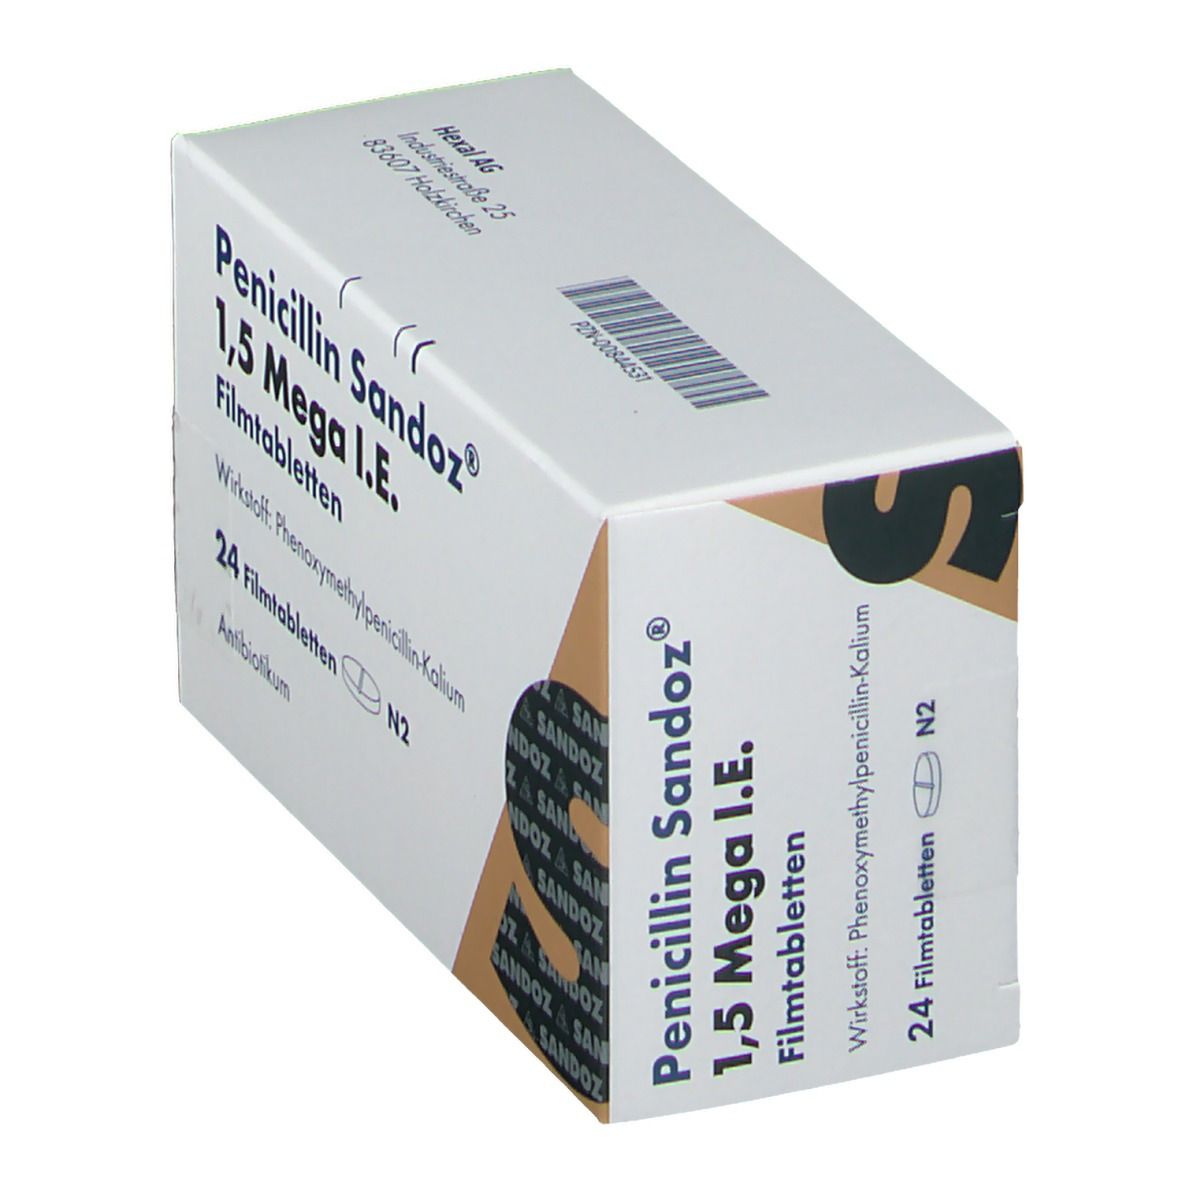 Penicillin Sandoz® 1,5 Mega I.E.